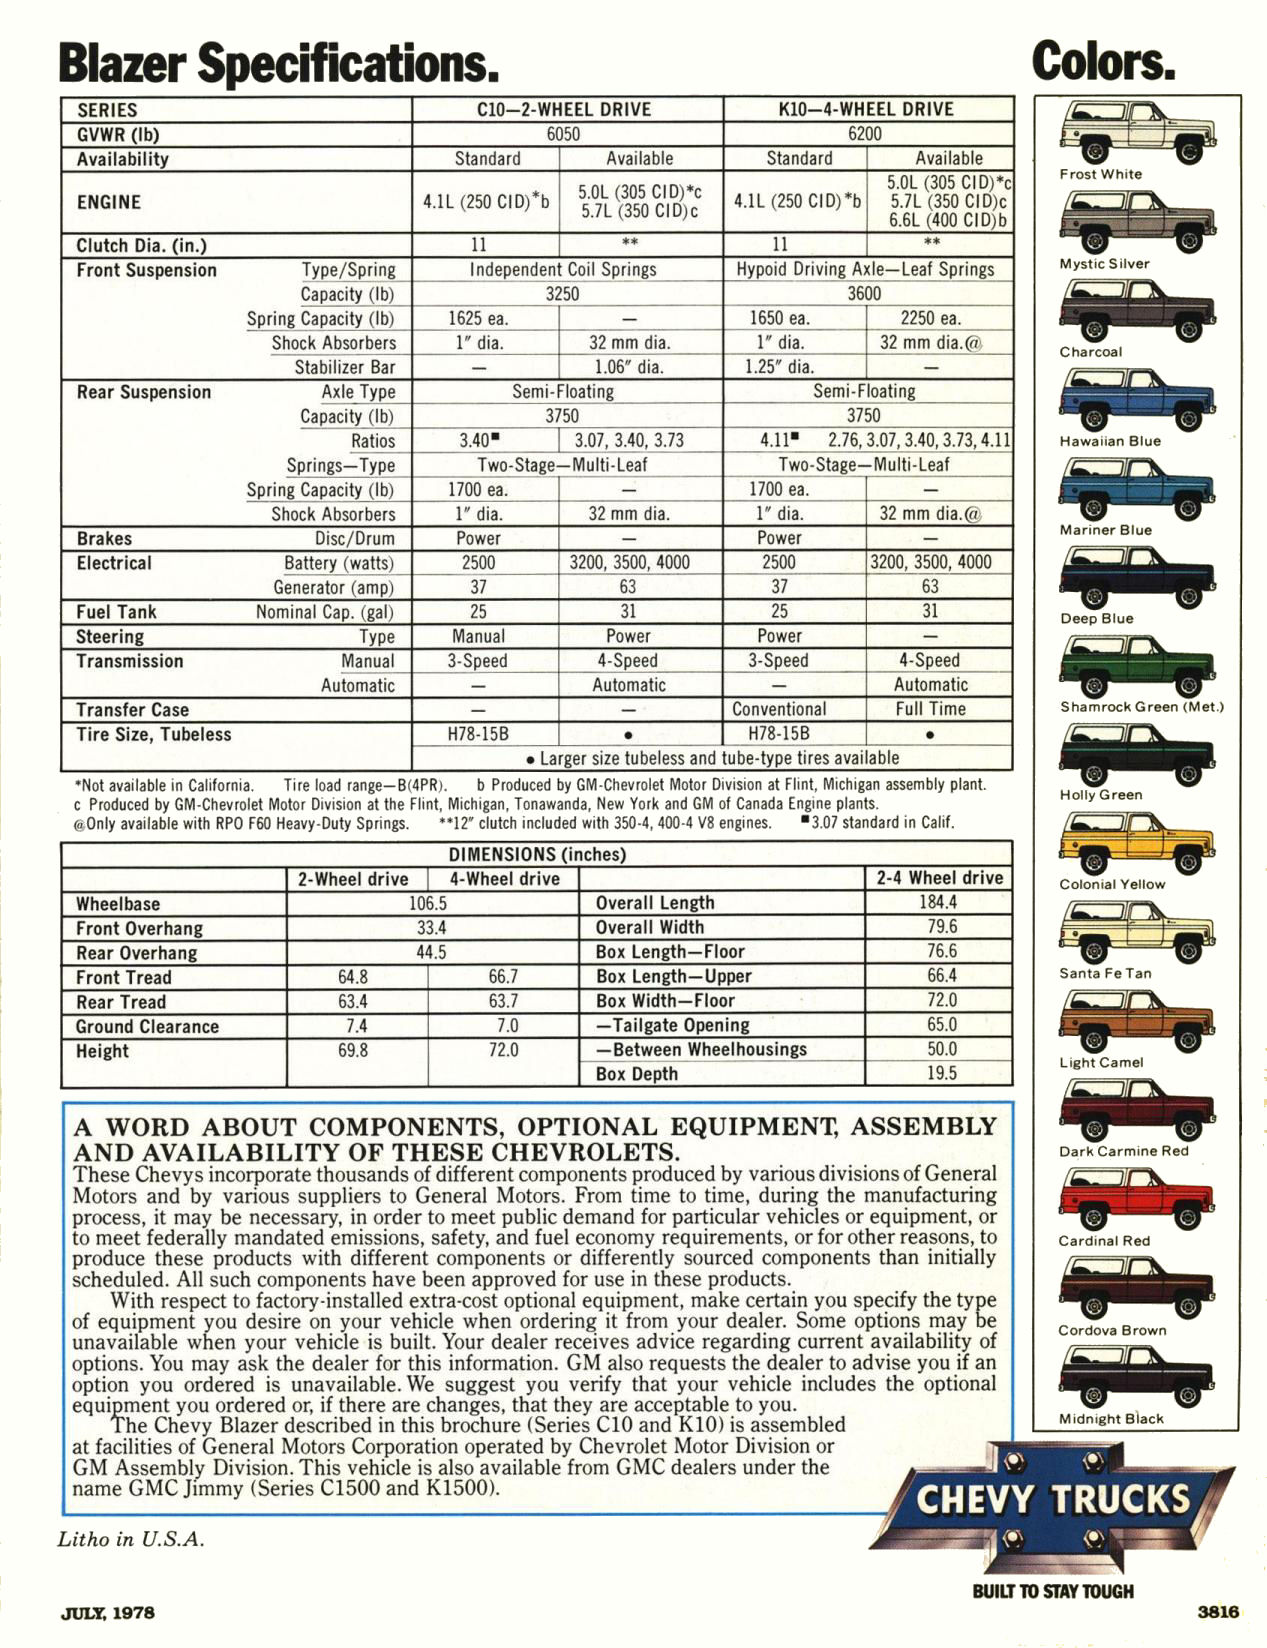 1979 Chevrolet Blazer Brochure Page 4